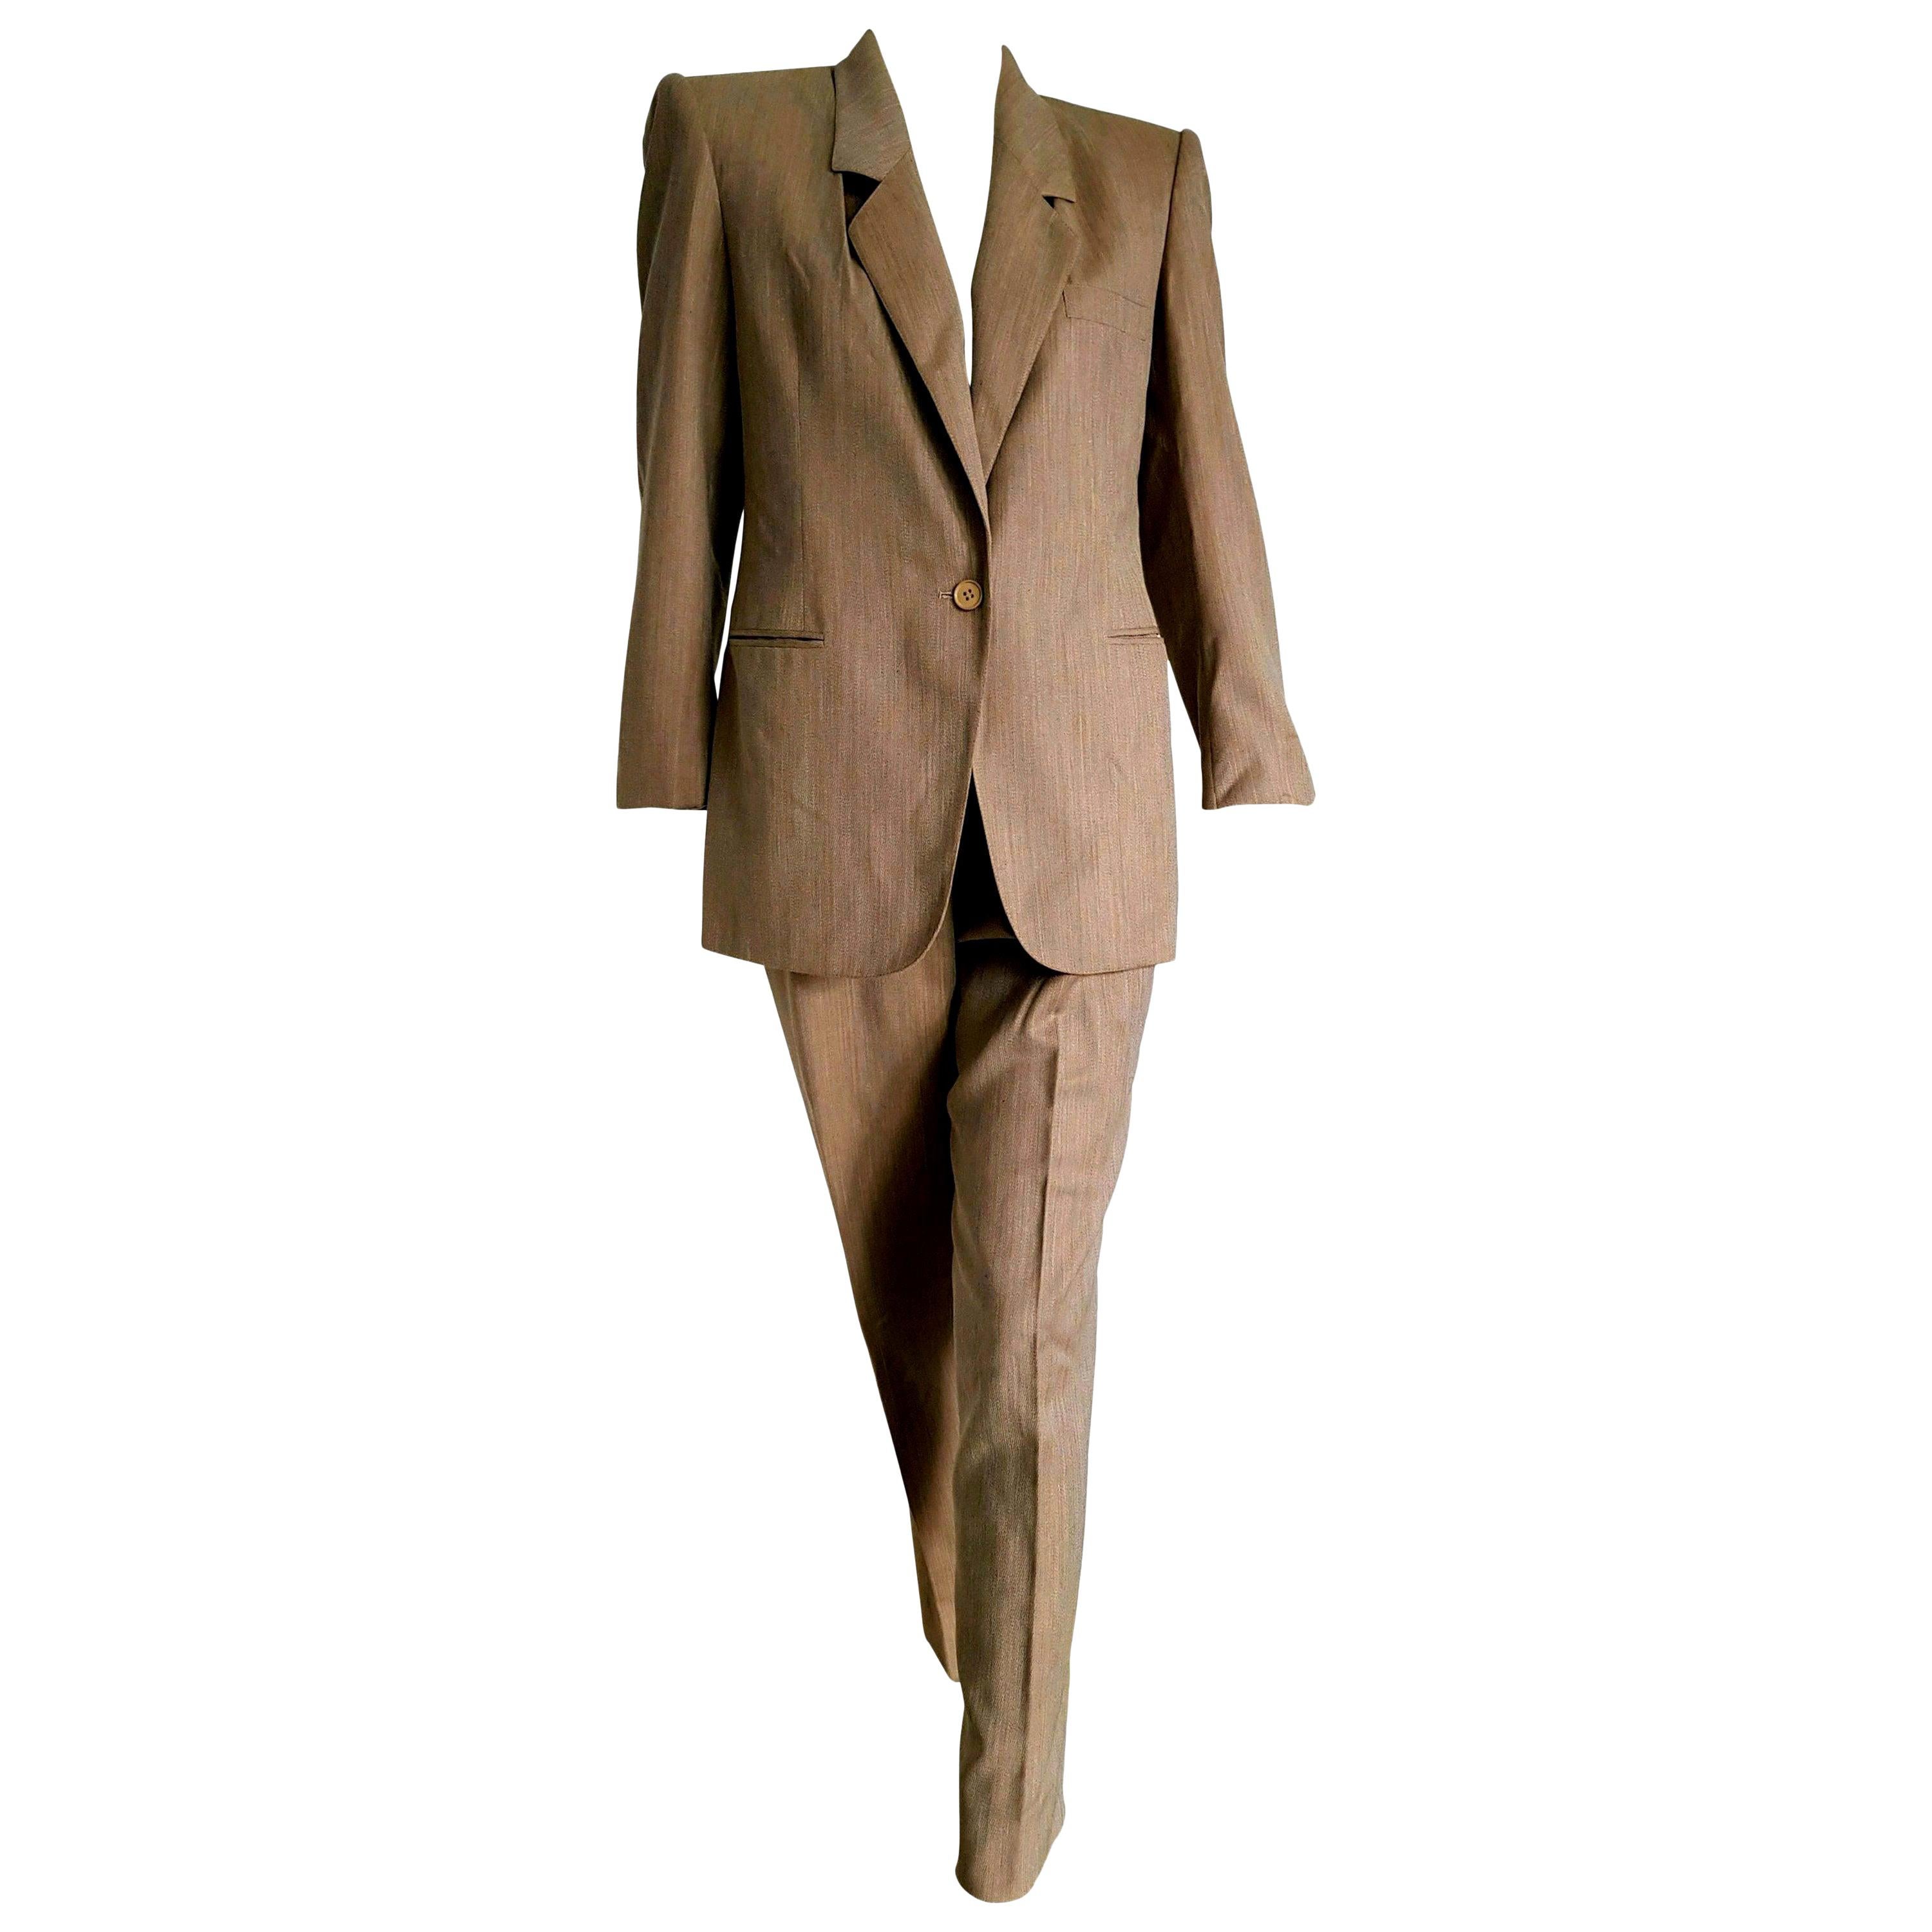 Gianfranco FERRE "New" Light Brown Wool Jacket Pants Suit - Unworn For Sale